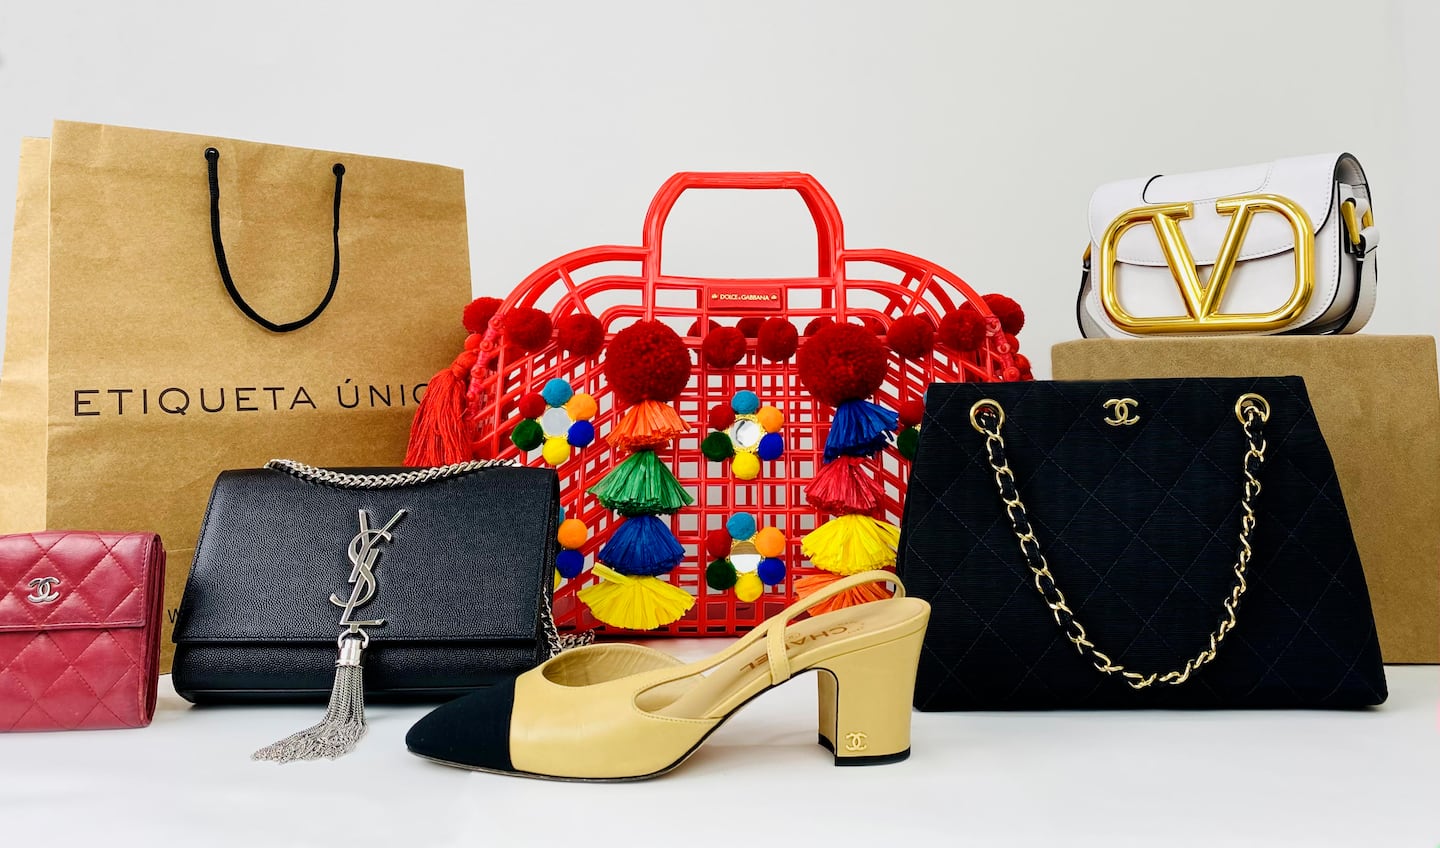 Etiqueta Unica is Brazil's largest e-commerce platform for second-hand luxury goods.